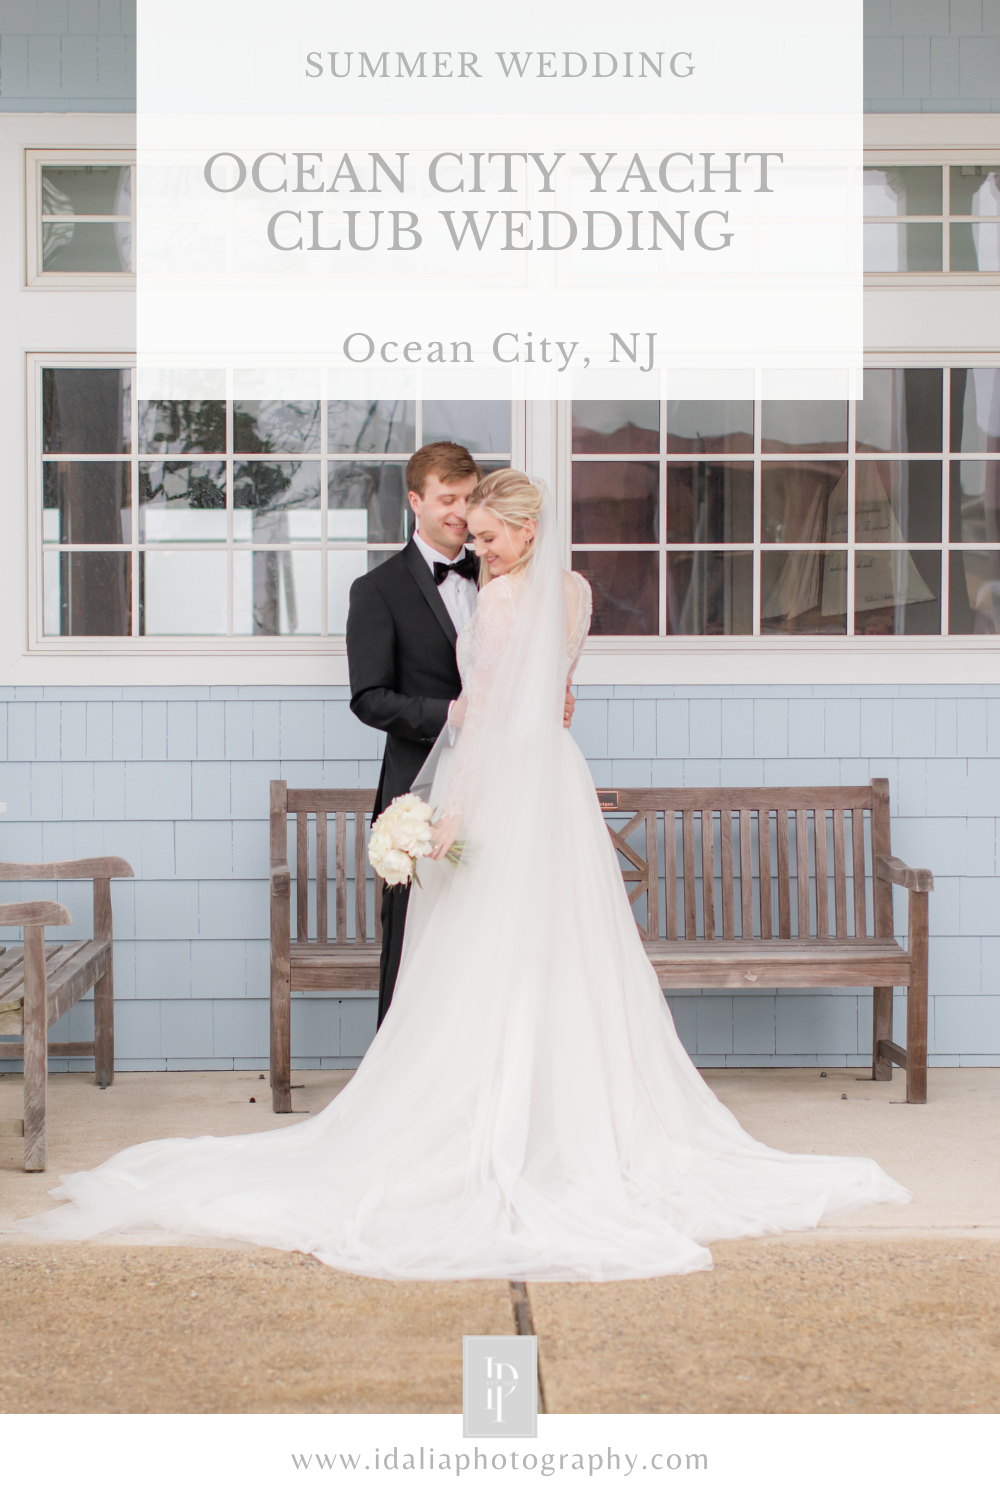 rainy wedding day inspiration in Ocean City NJ